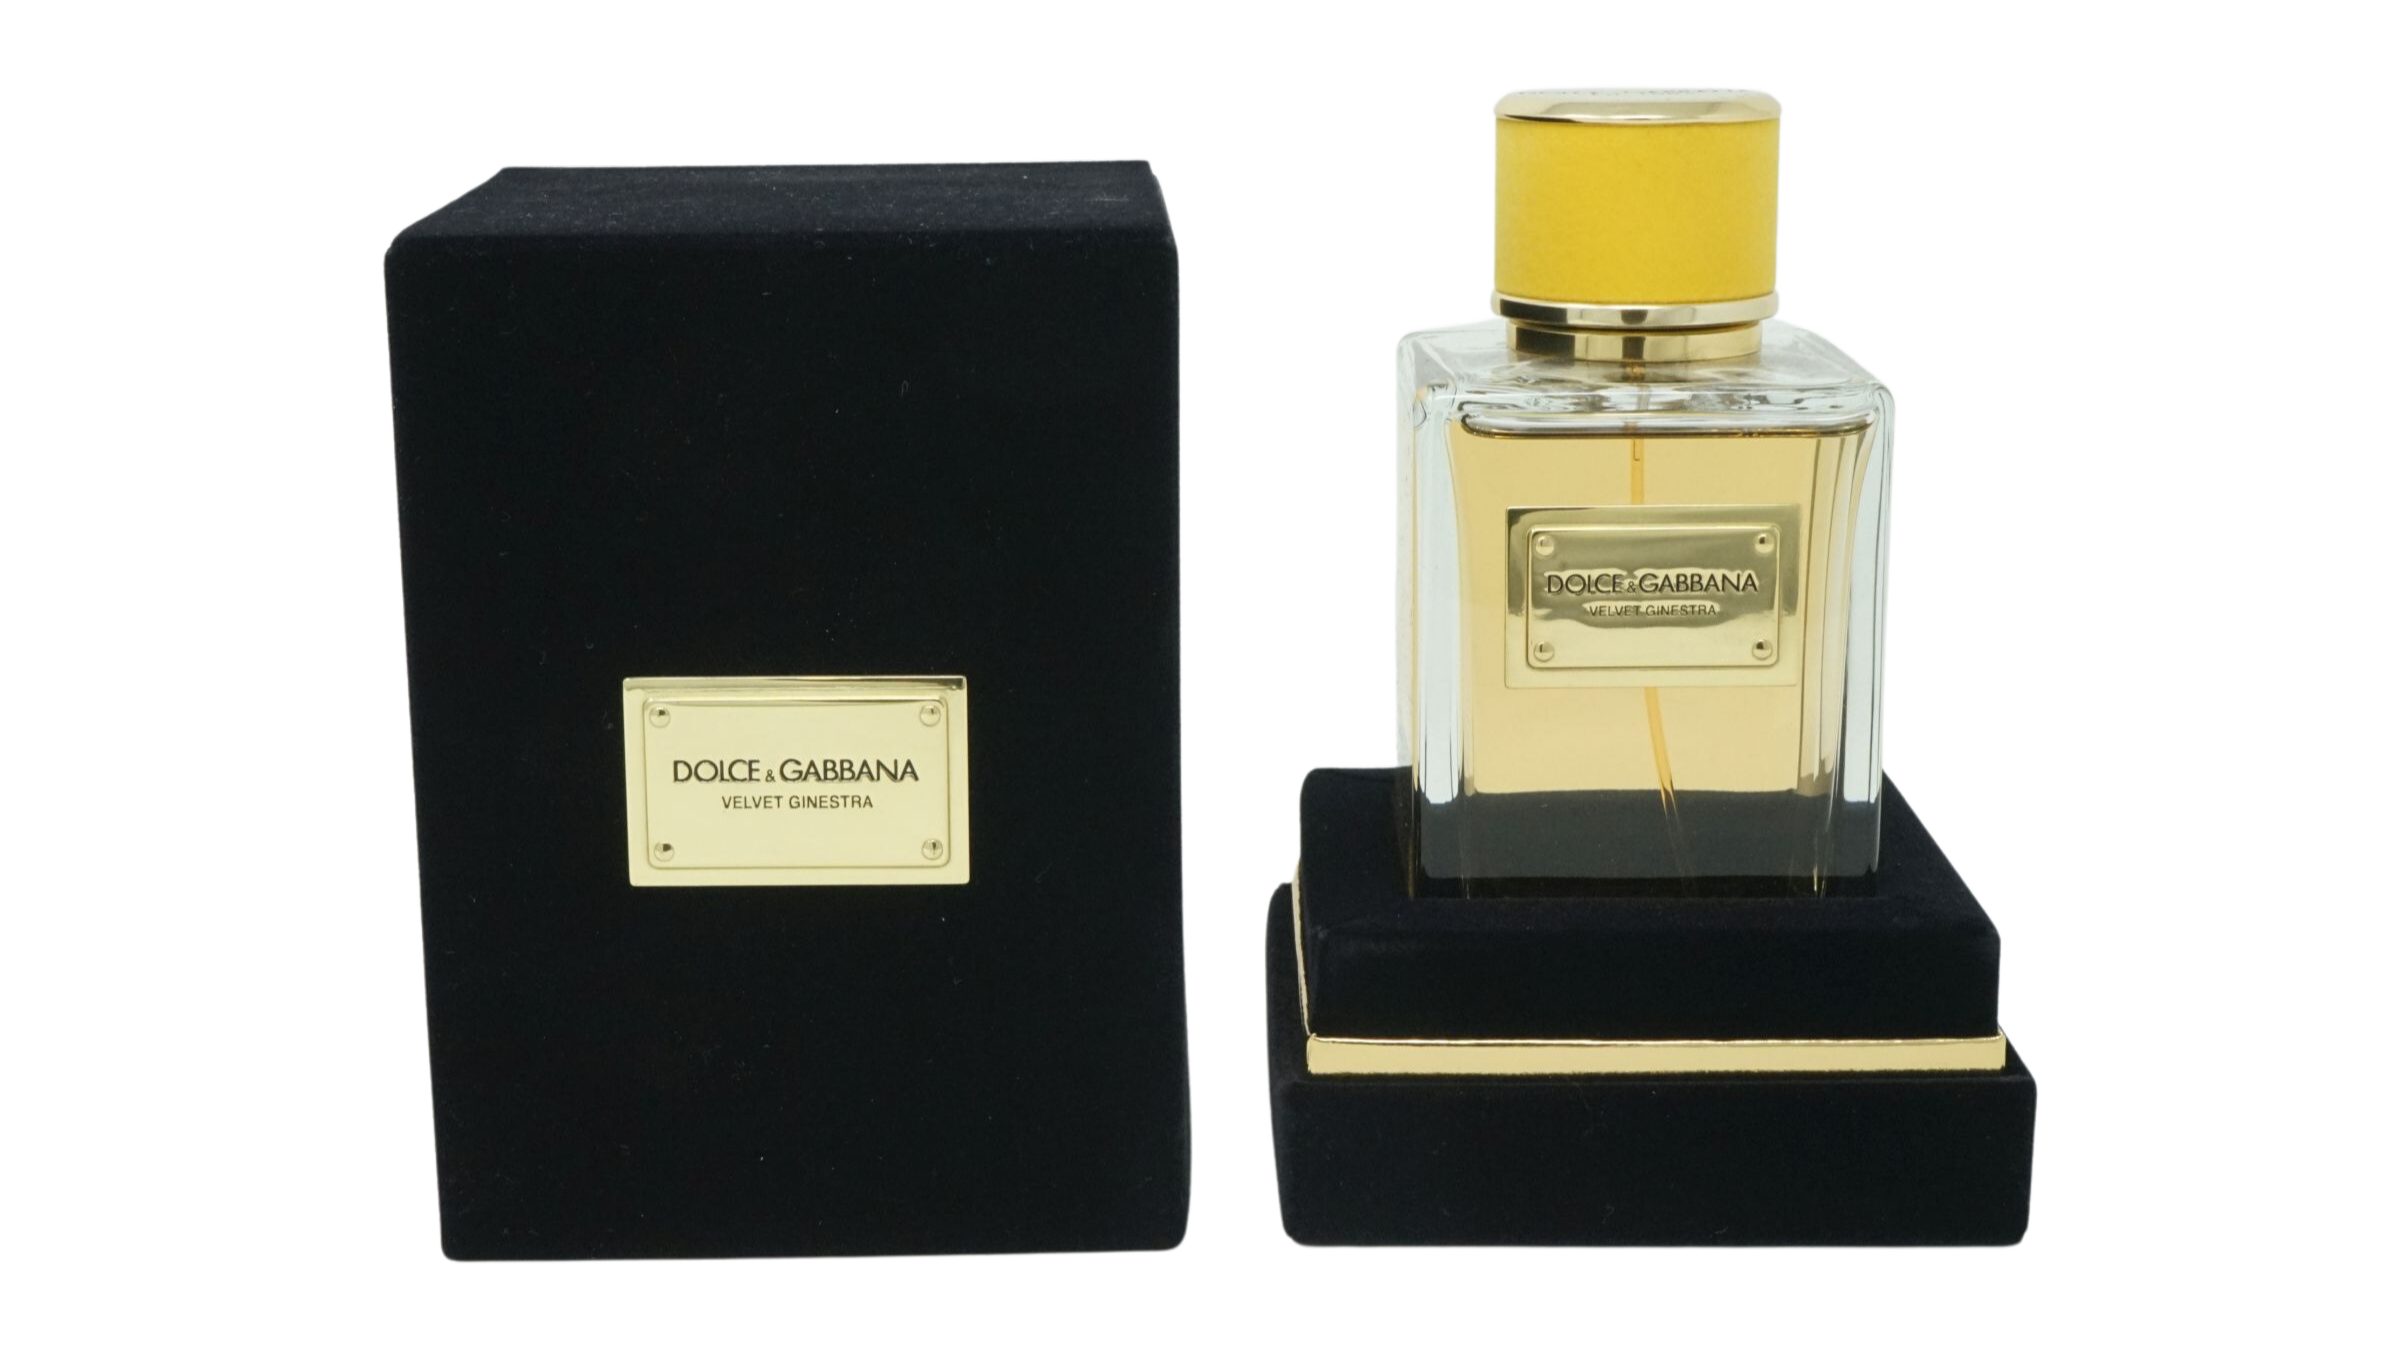 DOLCE & GABBANA Eau de Parfum Dolce & Gabbana Velvet Ginestra Eau de parfum Spray 150ml | Eau de Parfum